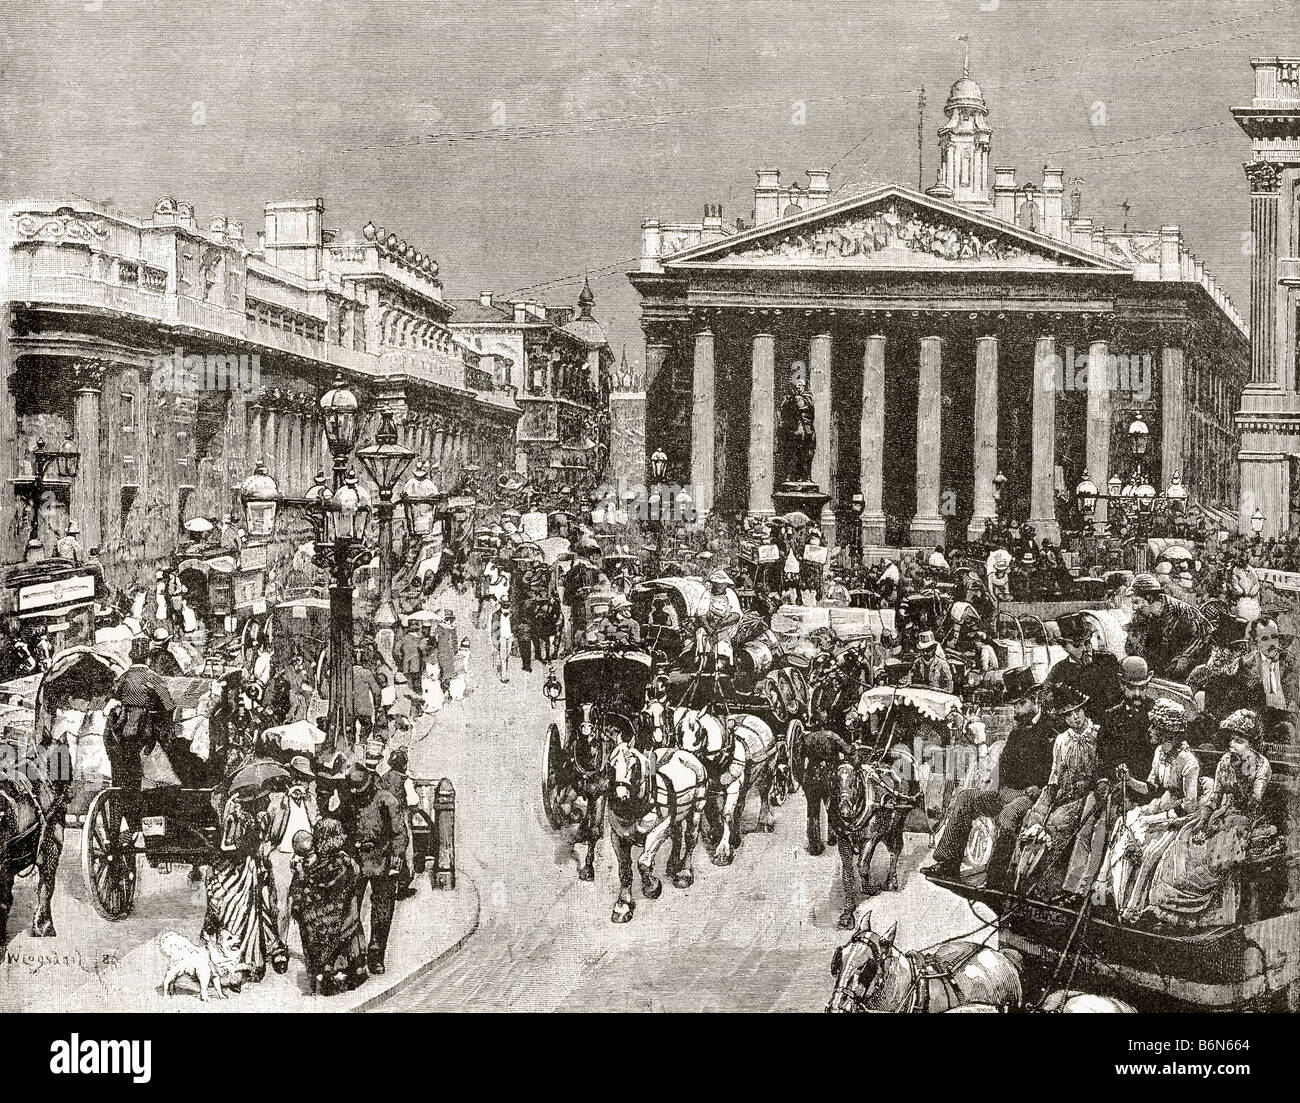 La Banca di Inghilterra e la Royal Exchange di Londra, Inghilterra, nel XIX secolo Foto Stock